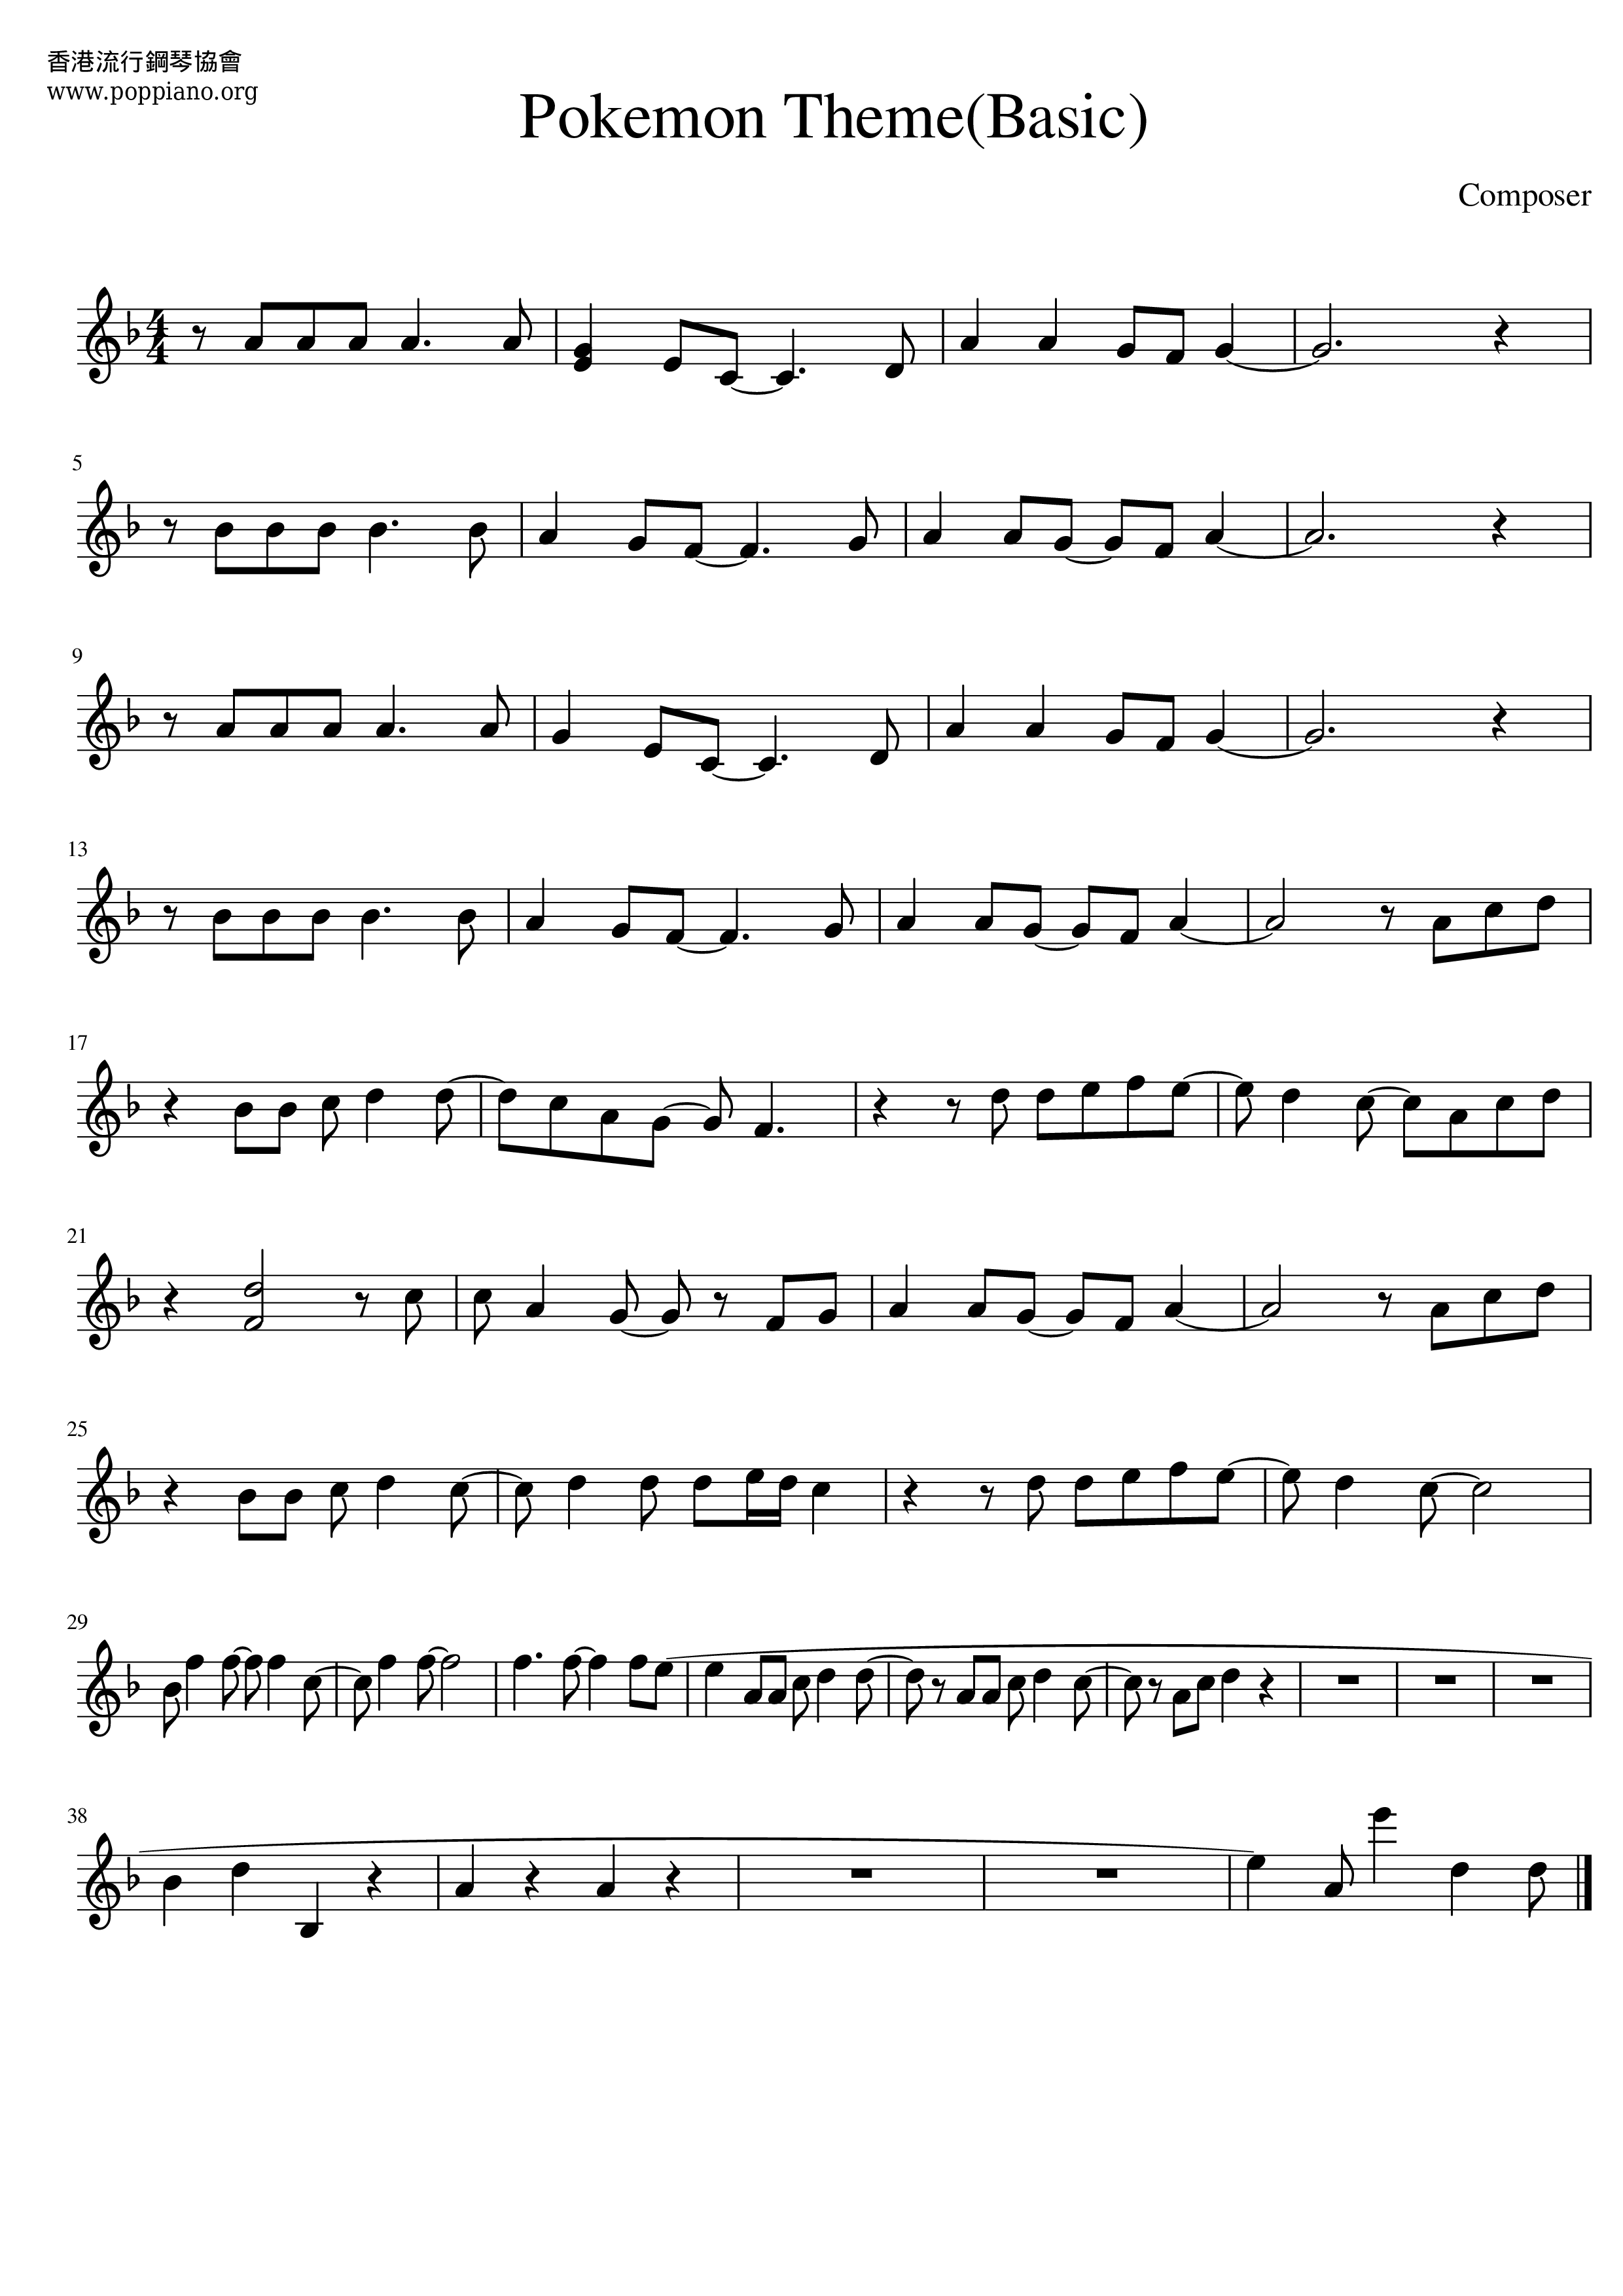 ☆ Pokemon Theme Song - Sheet Music / Piano Score Free PDF Download - HK Pop  Piano Academy ☆